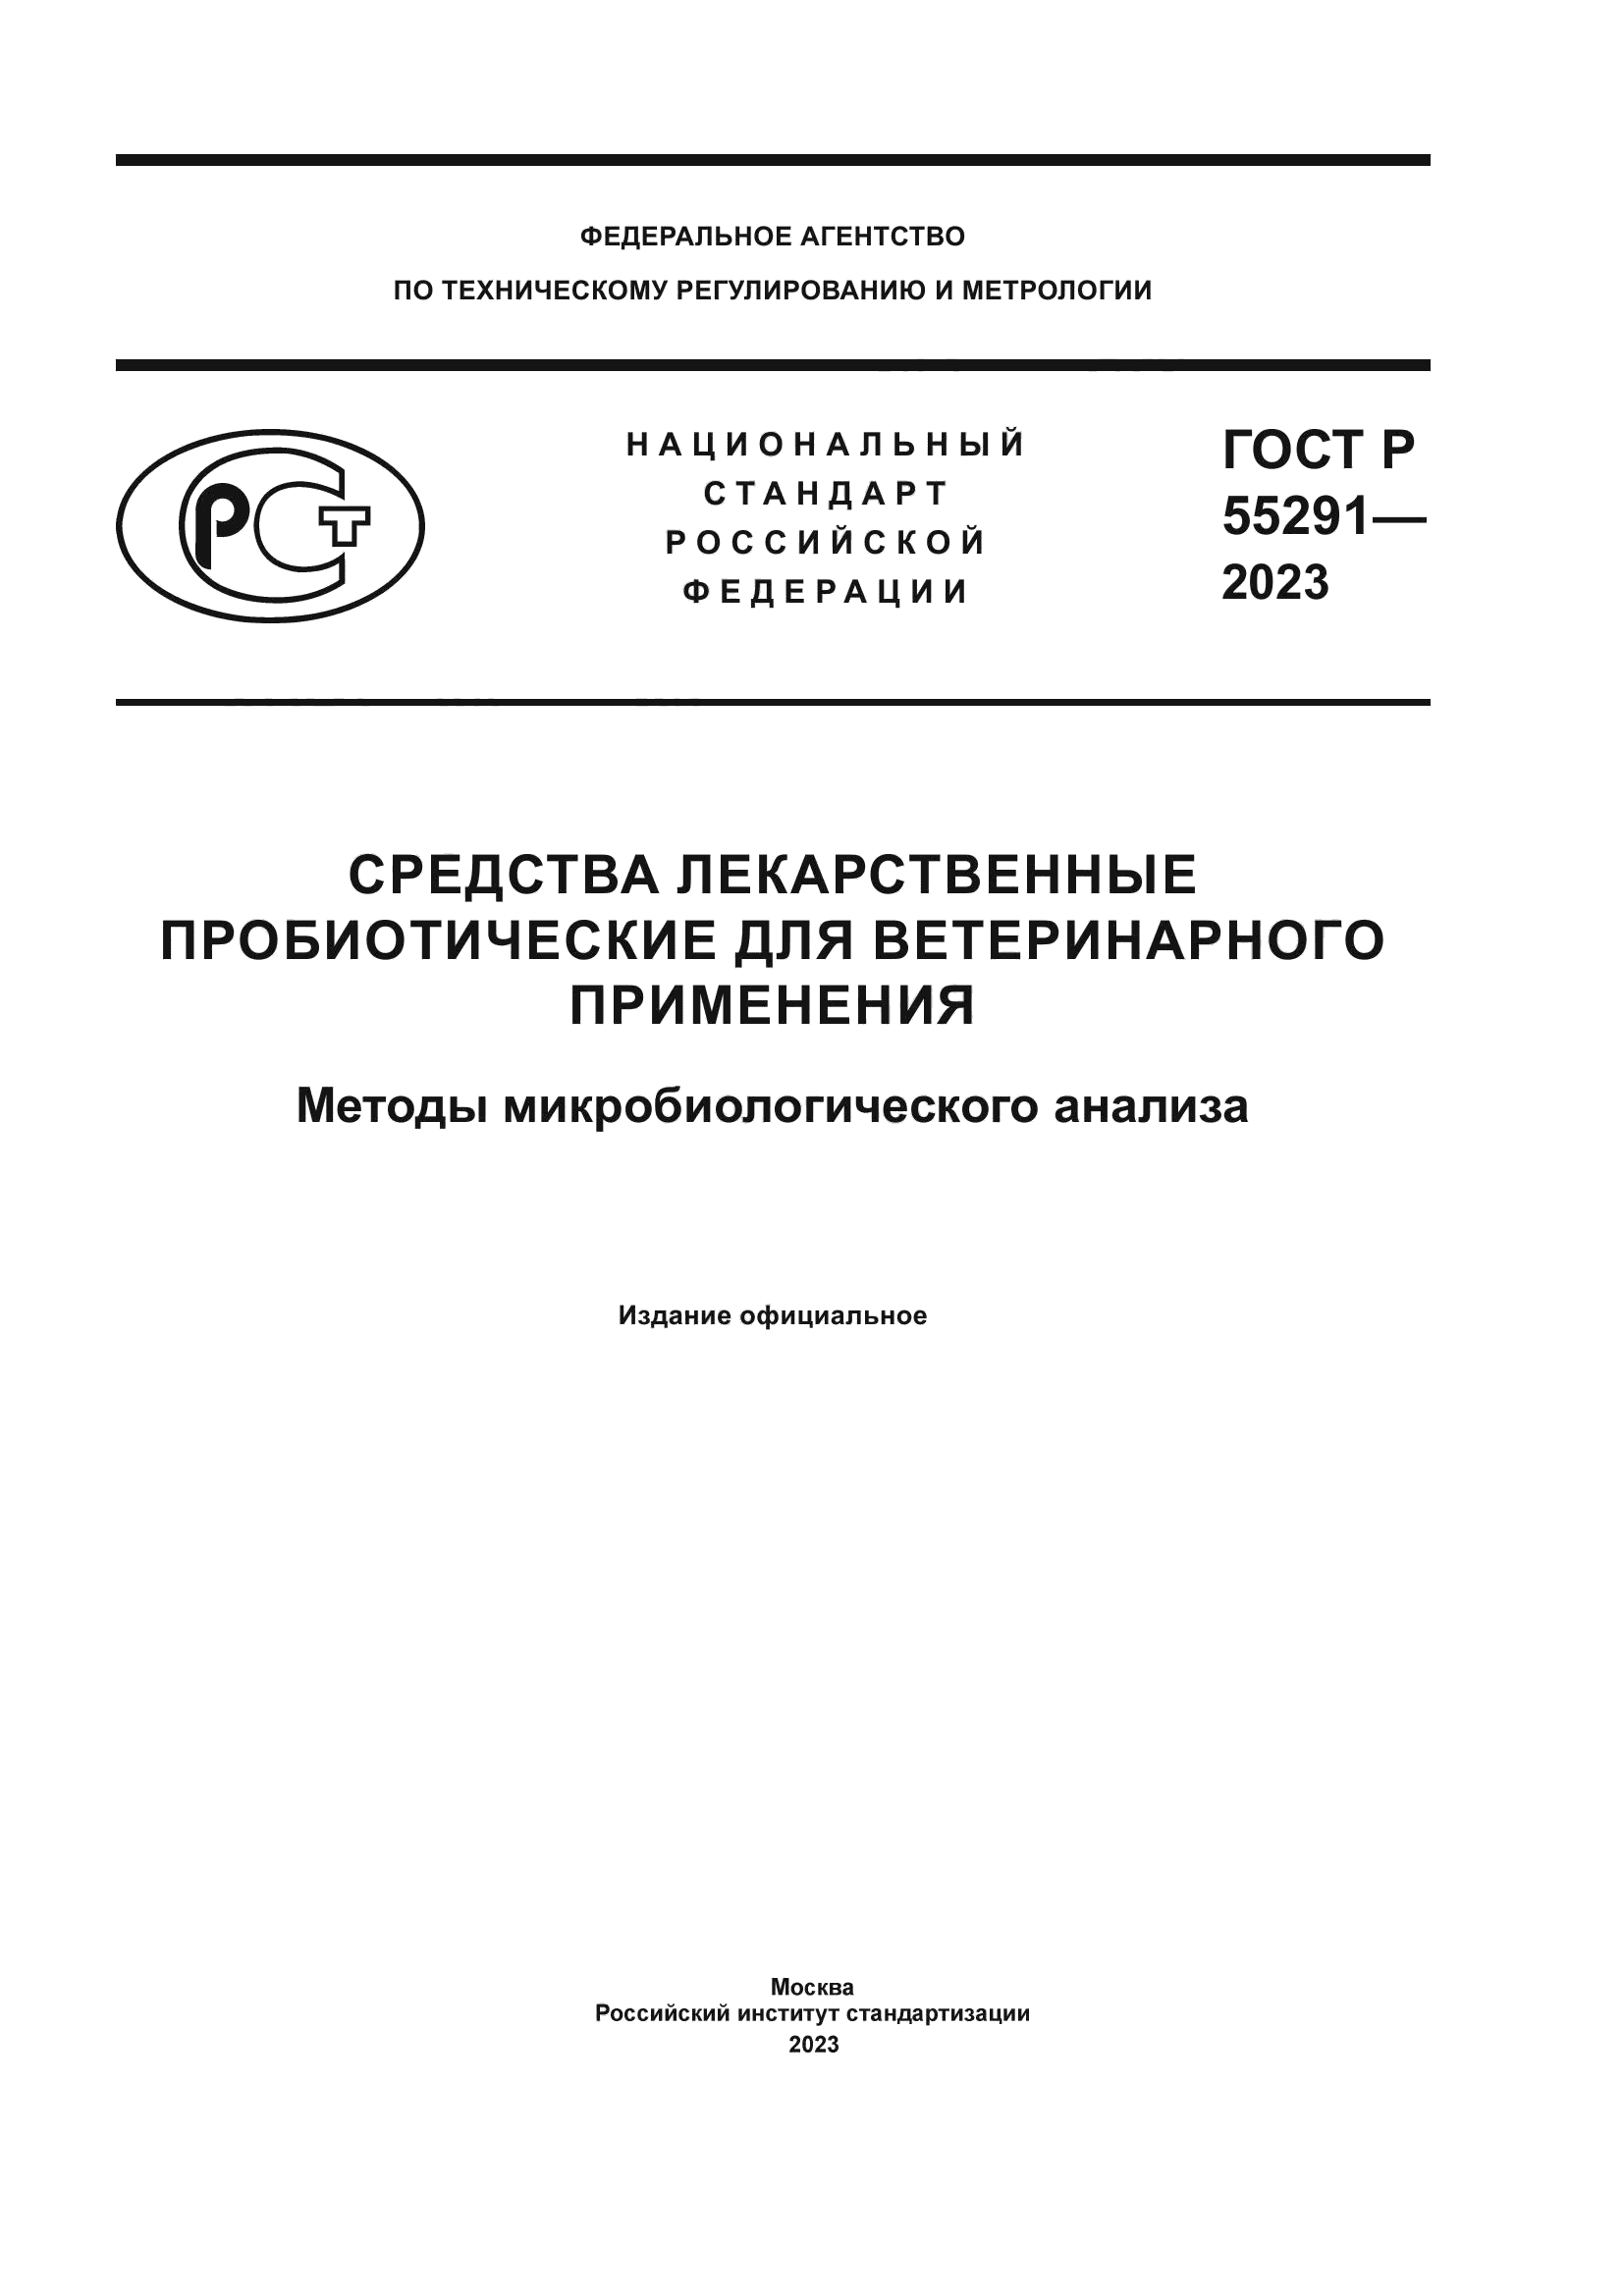 ГОСТ Р 55291-2023